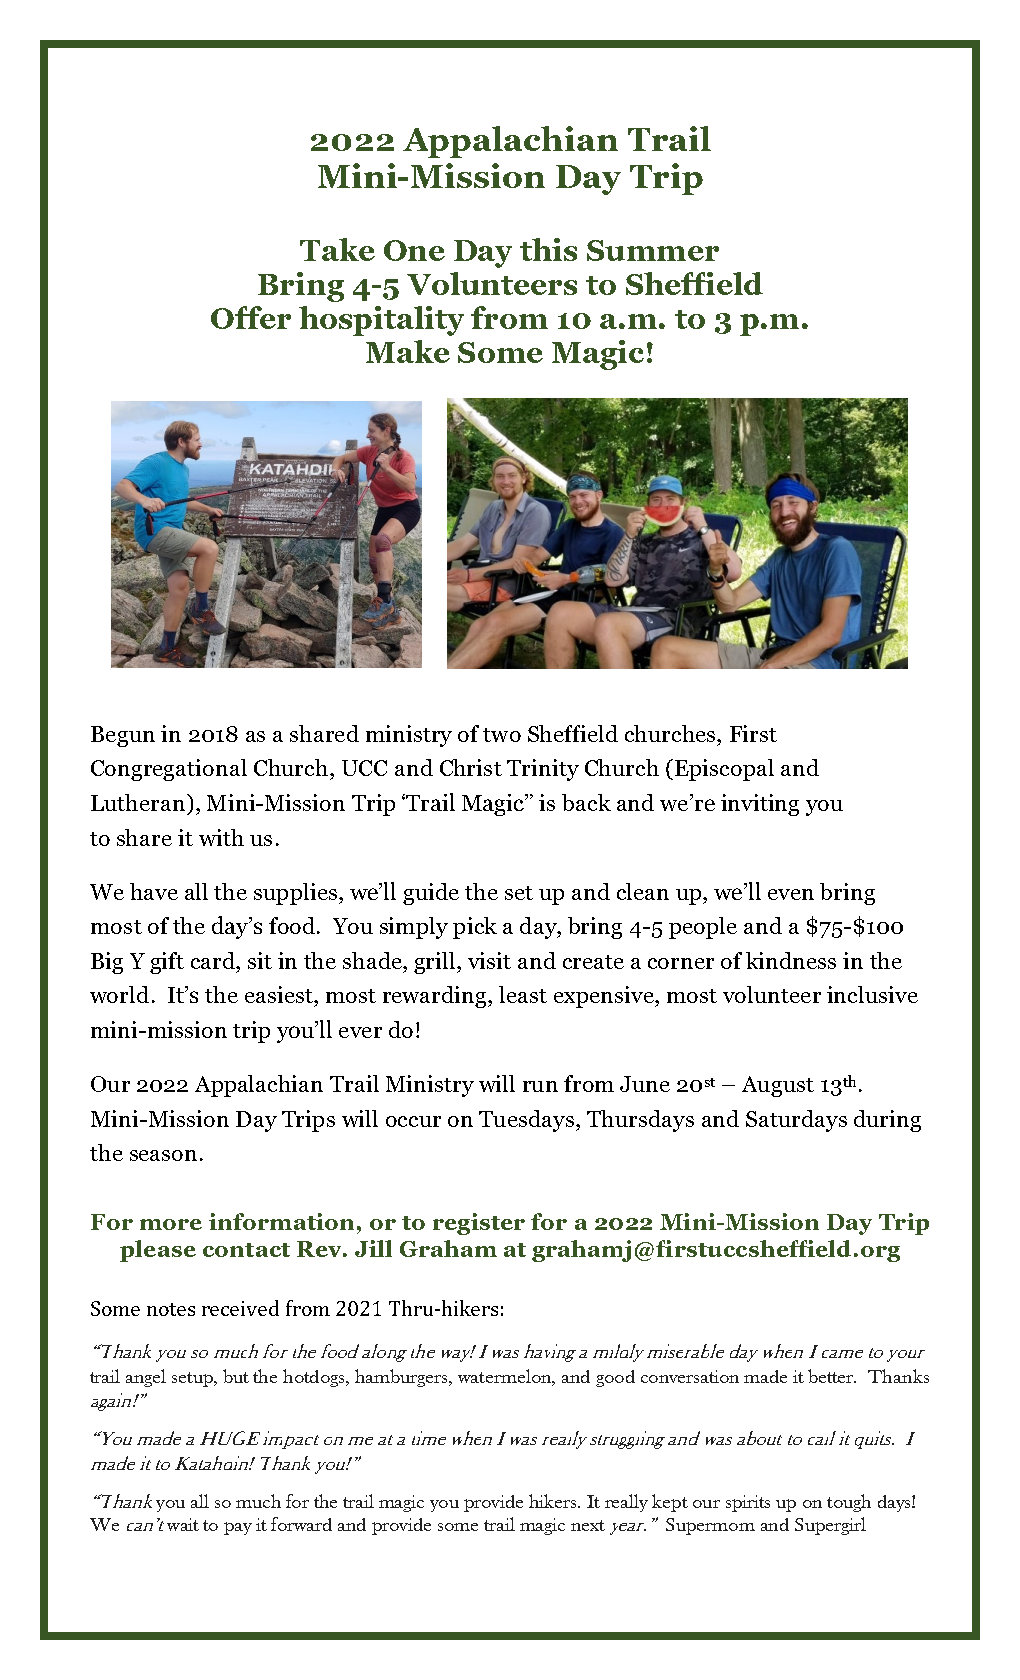 Trail Magic flyer